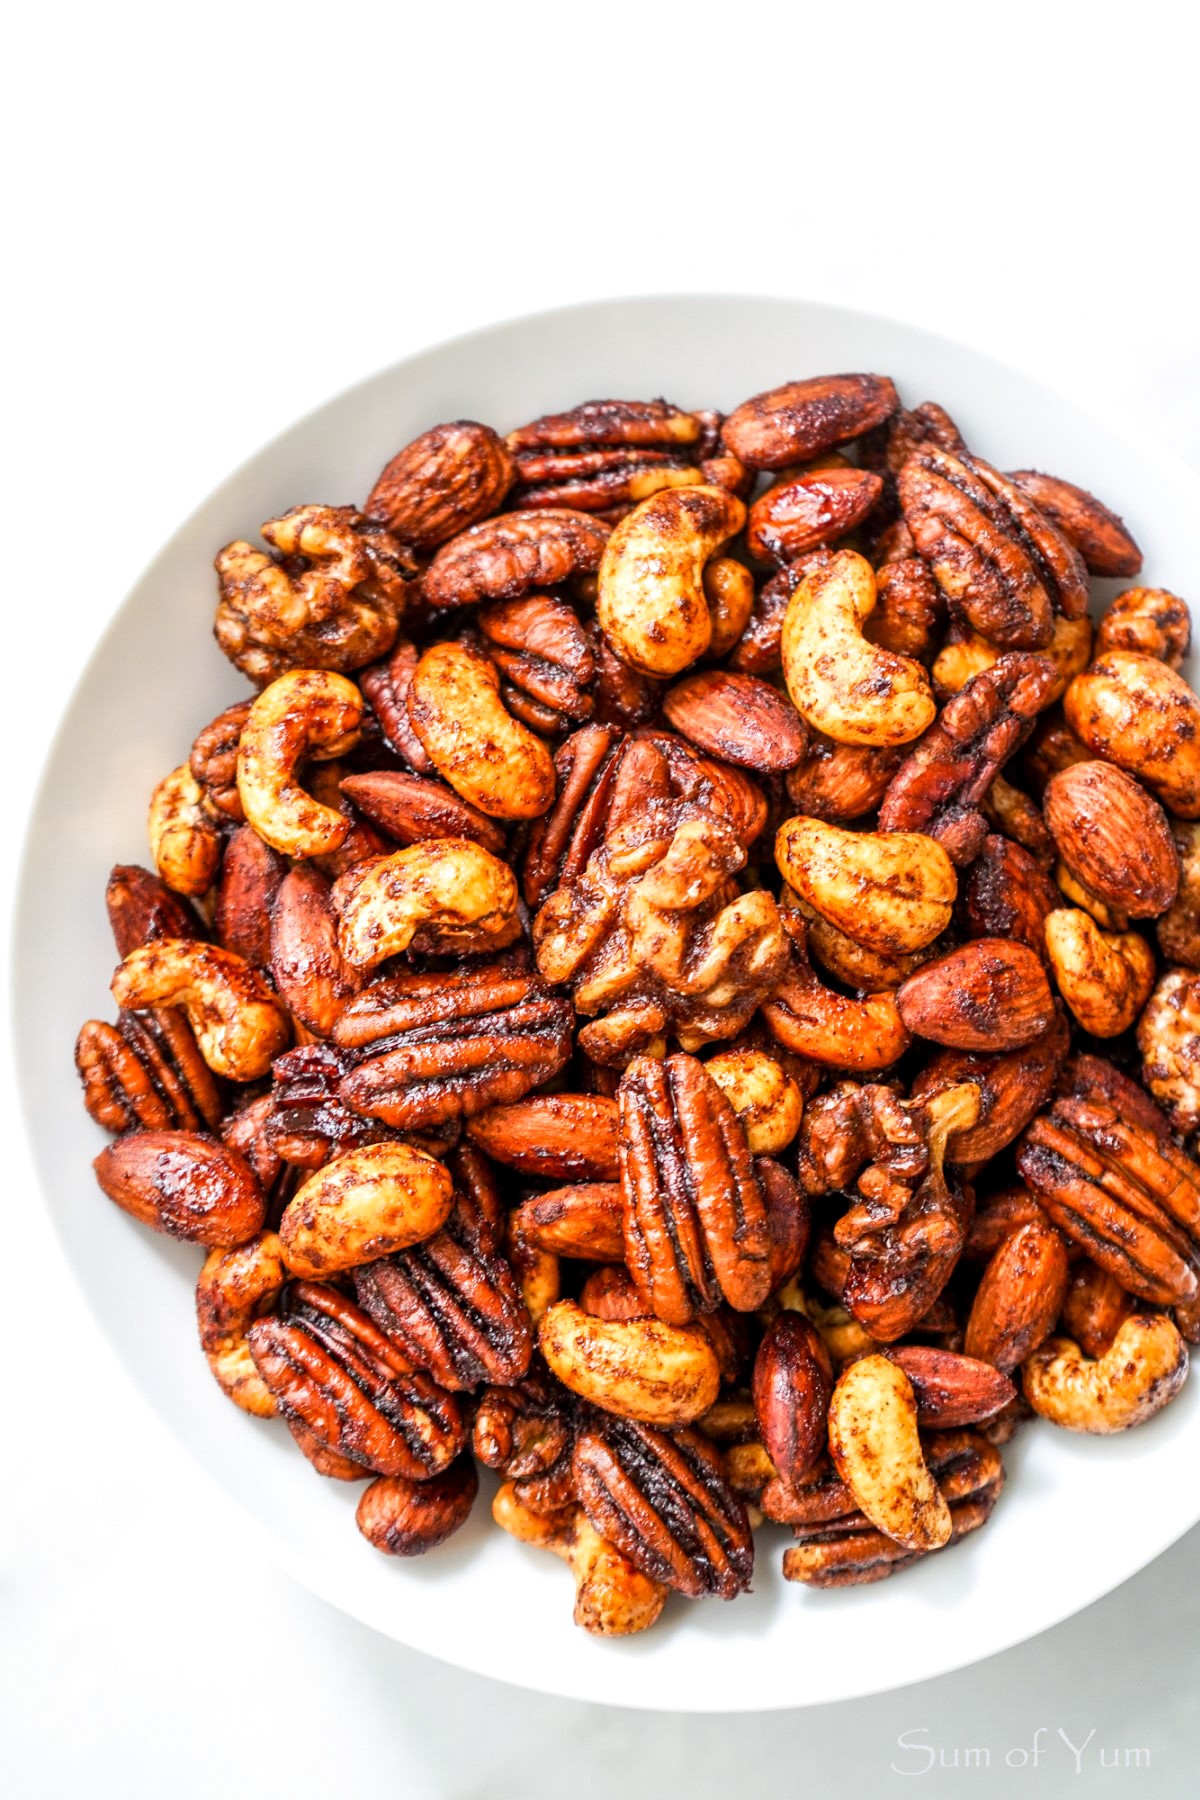 Honey Roasted Mixed Nuts 10 oz - The Nut House